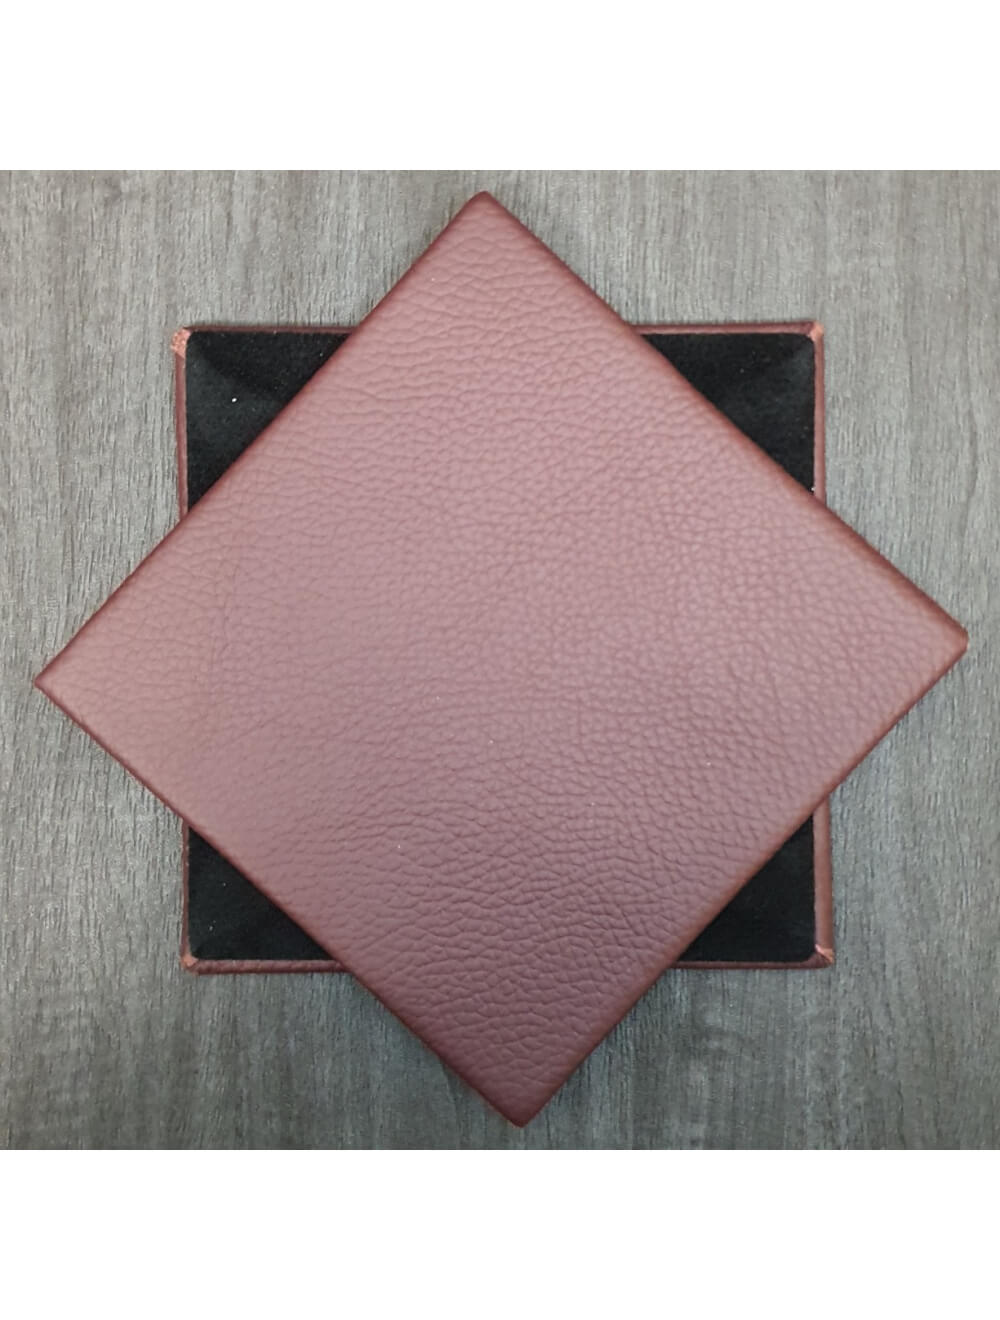 Dark GrapeShelly Leather Coaster- 10cm Sq (sale item)